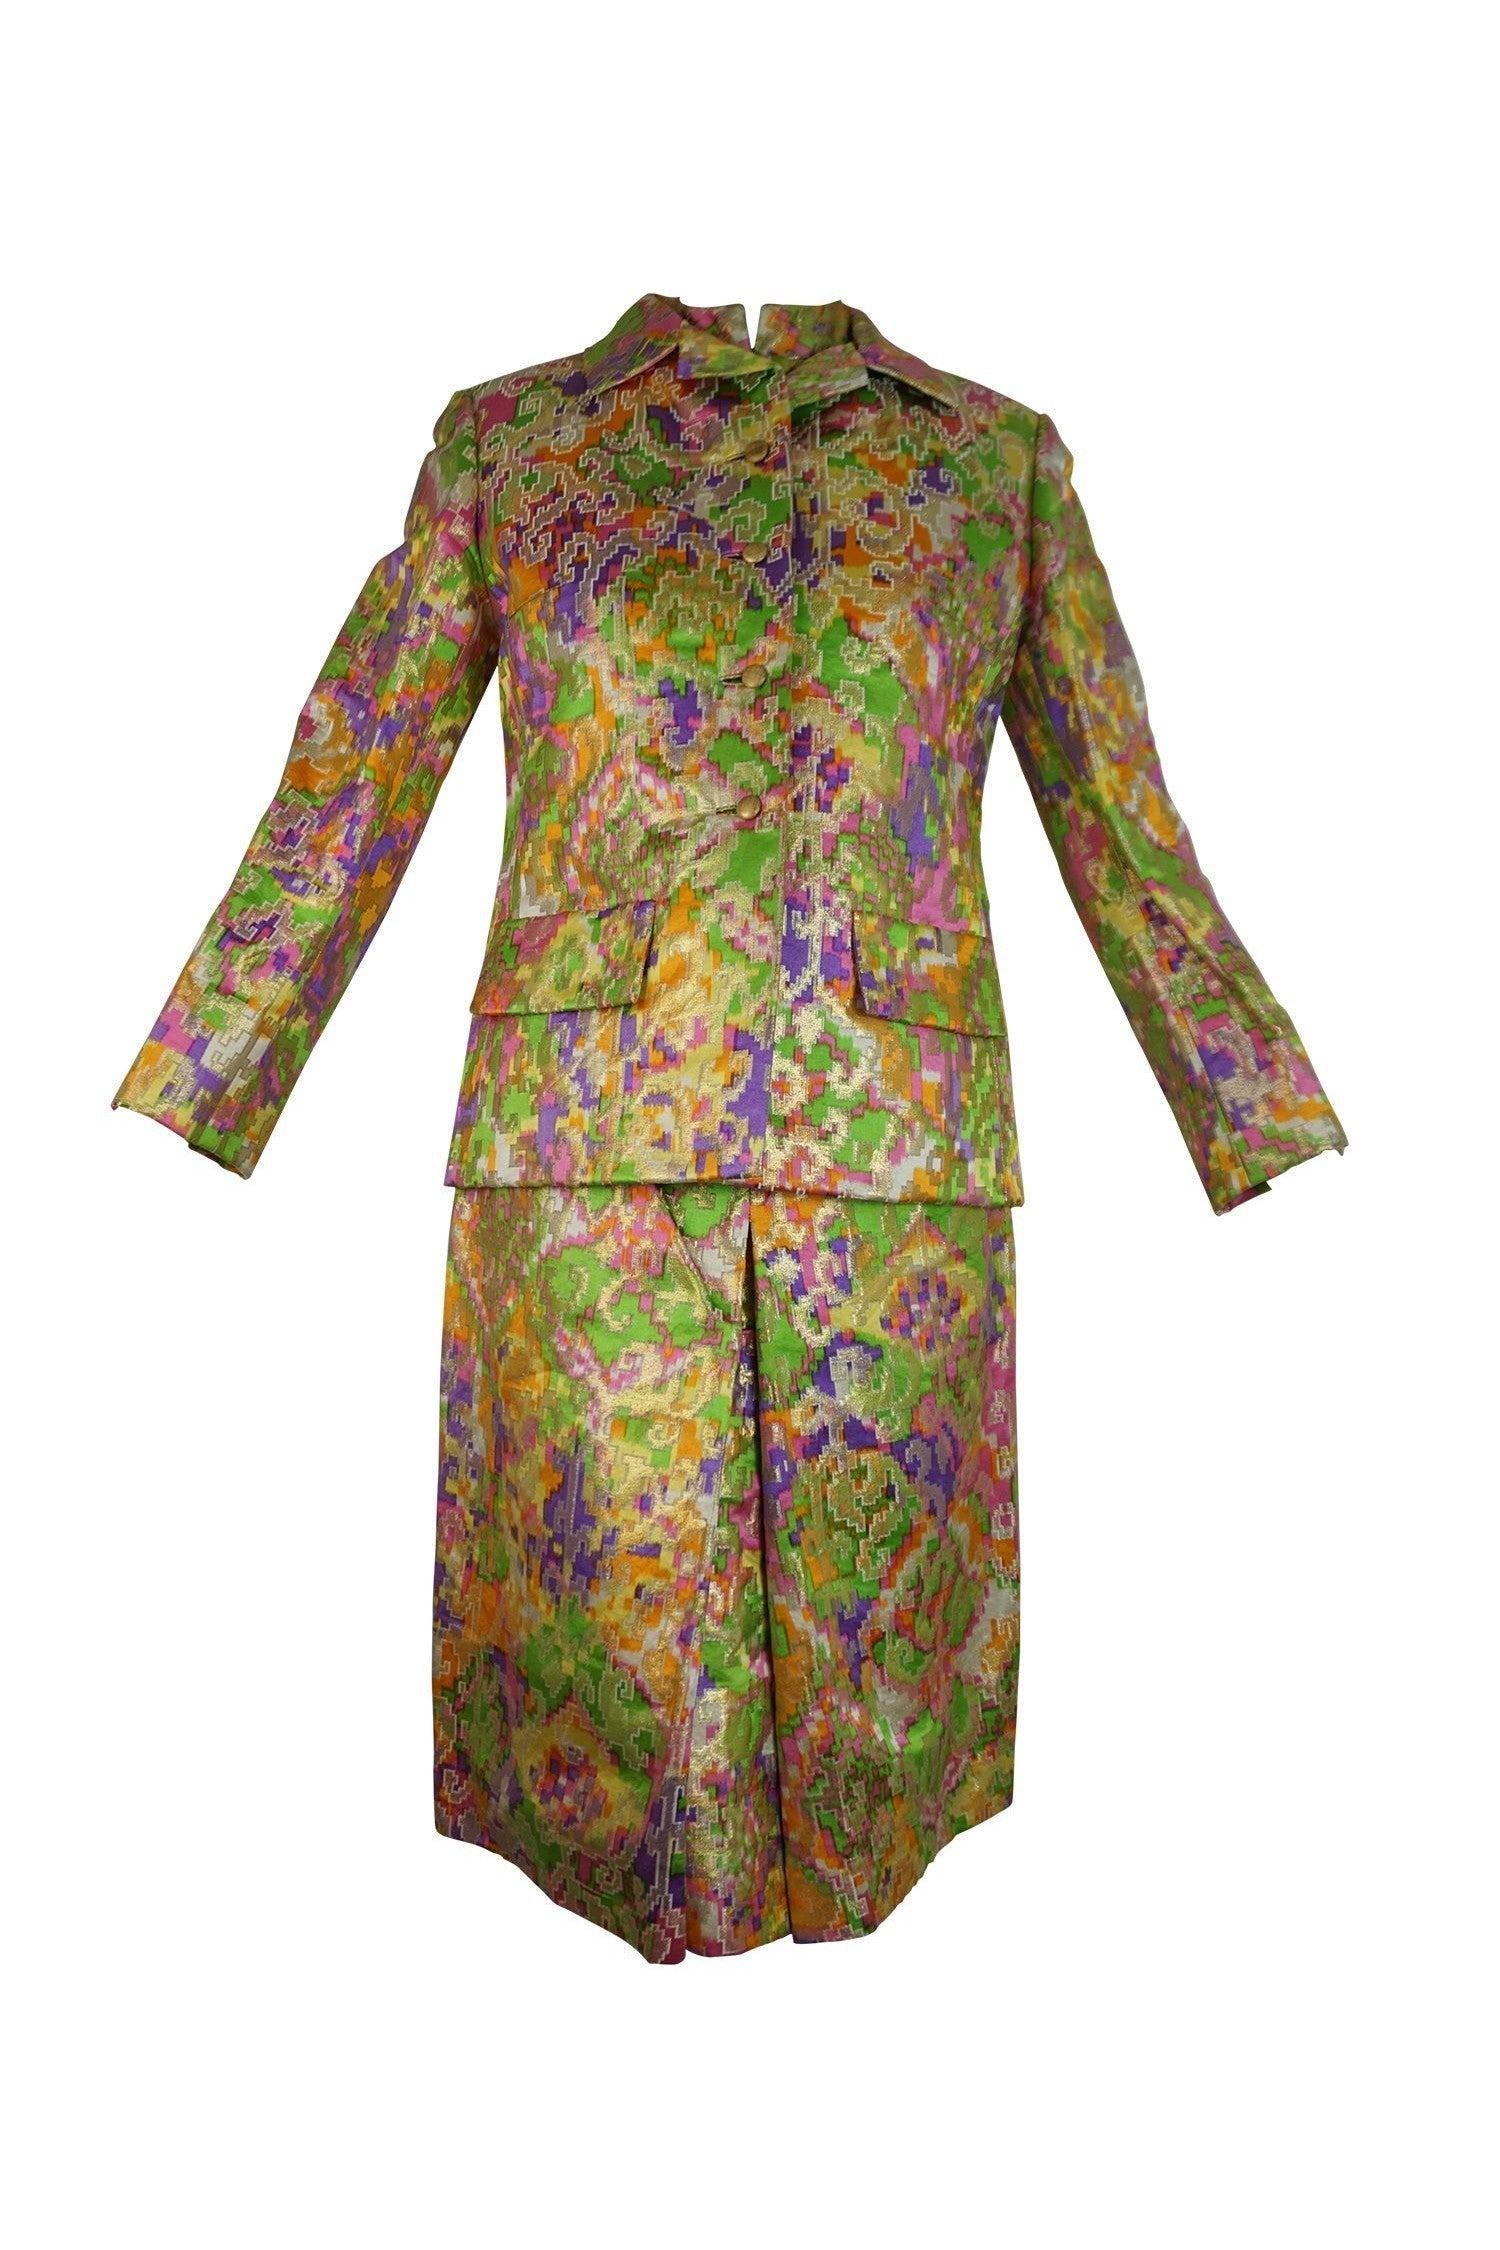 Christian Dior NY Brocade Skirt Jacket Vest 1960's